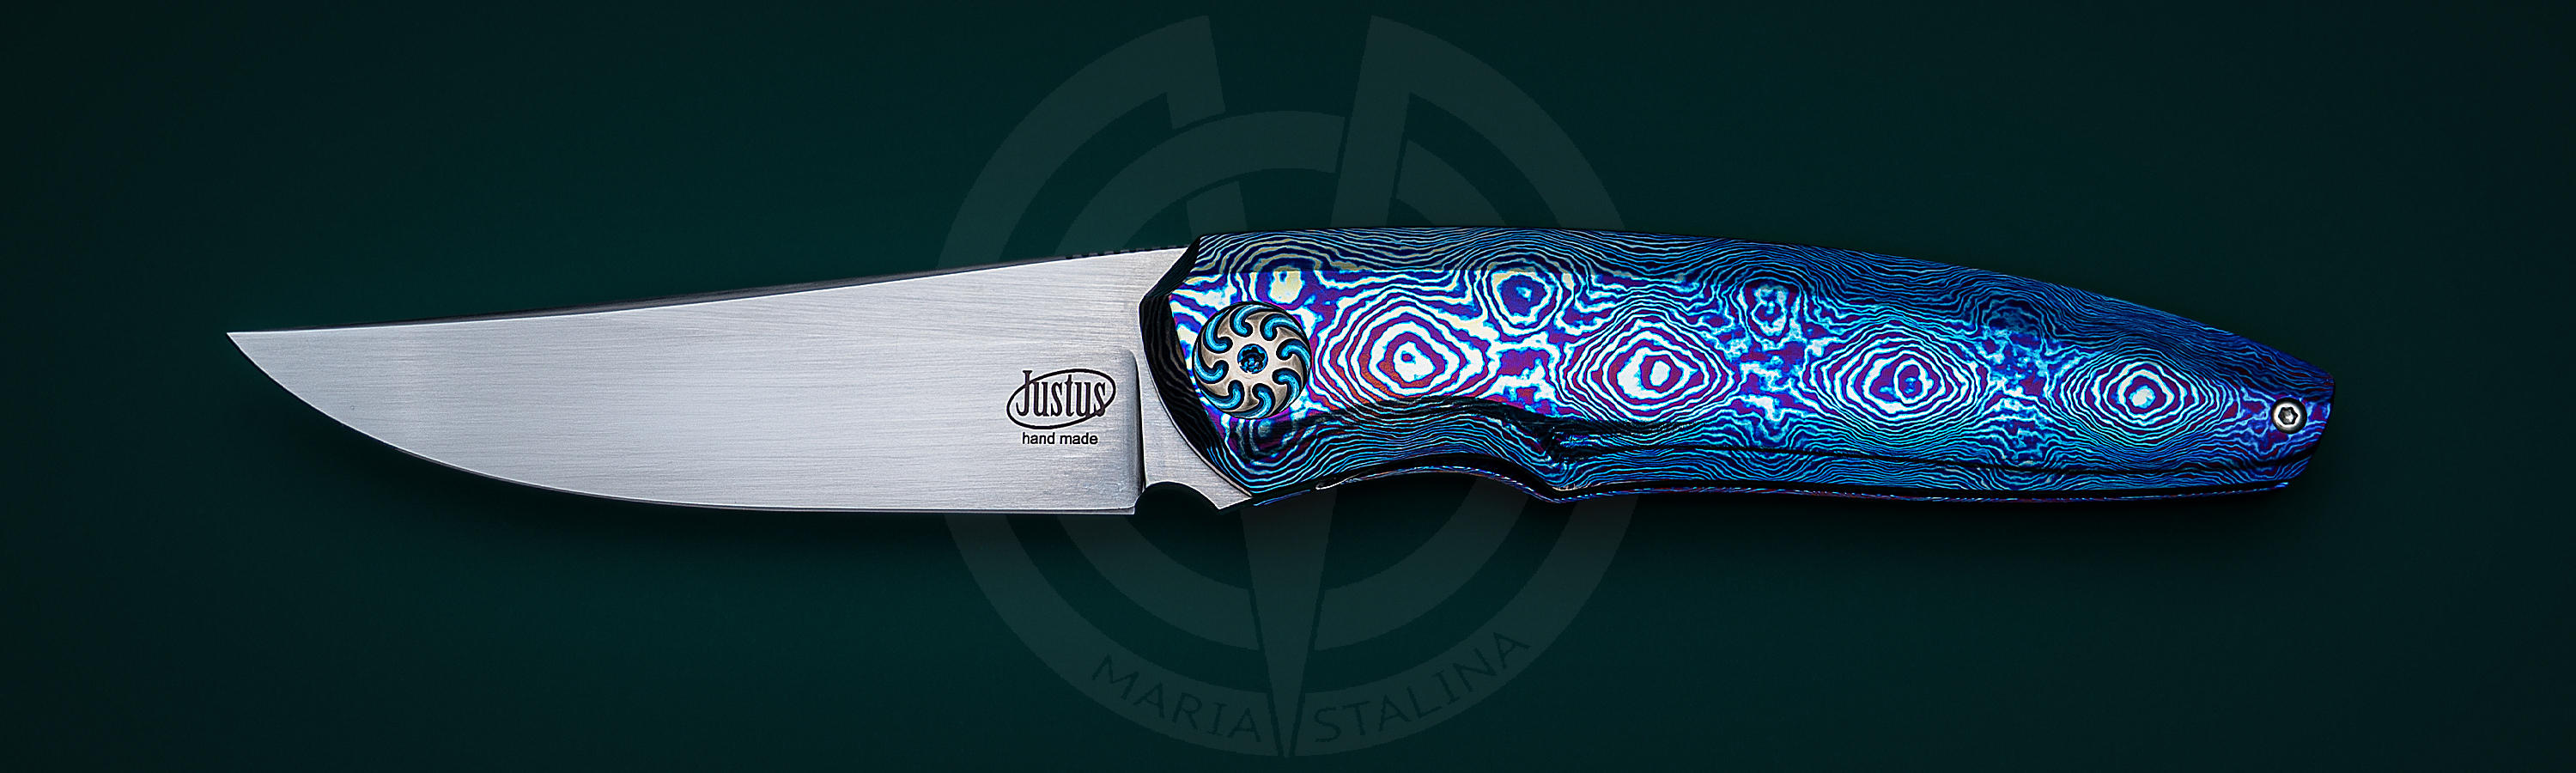 Justus Knives прототип ножа Northern